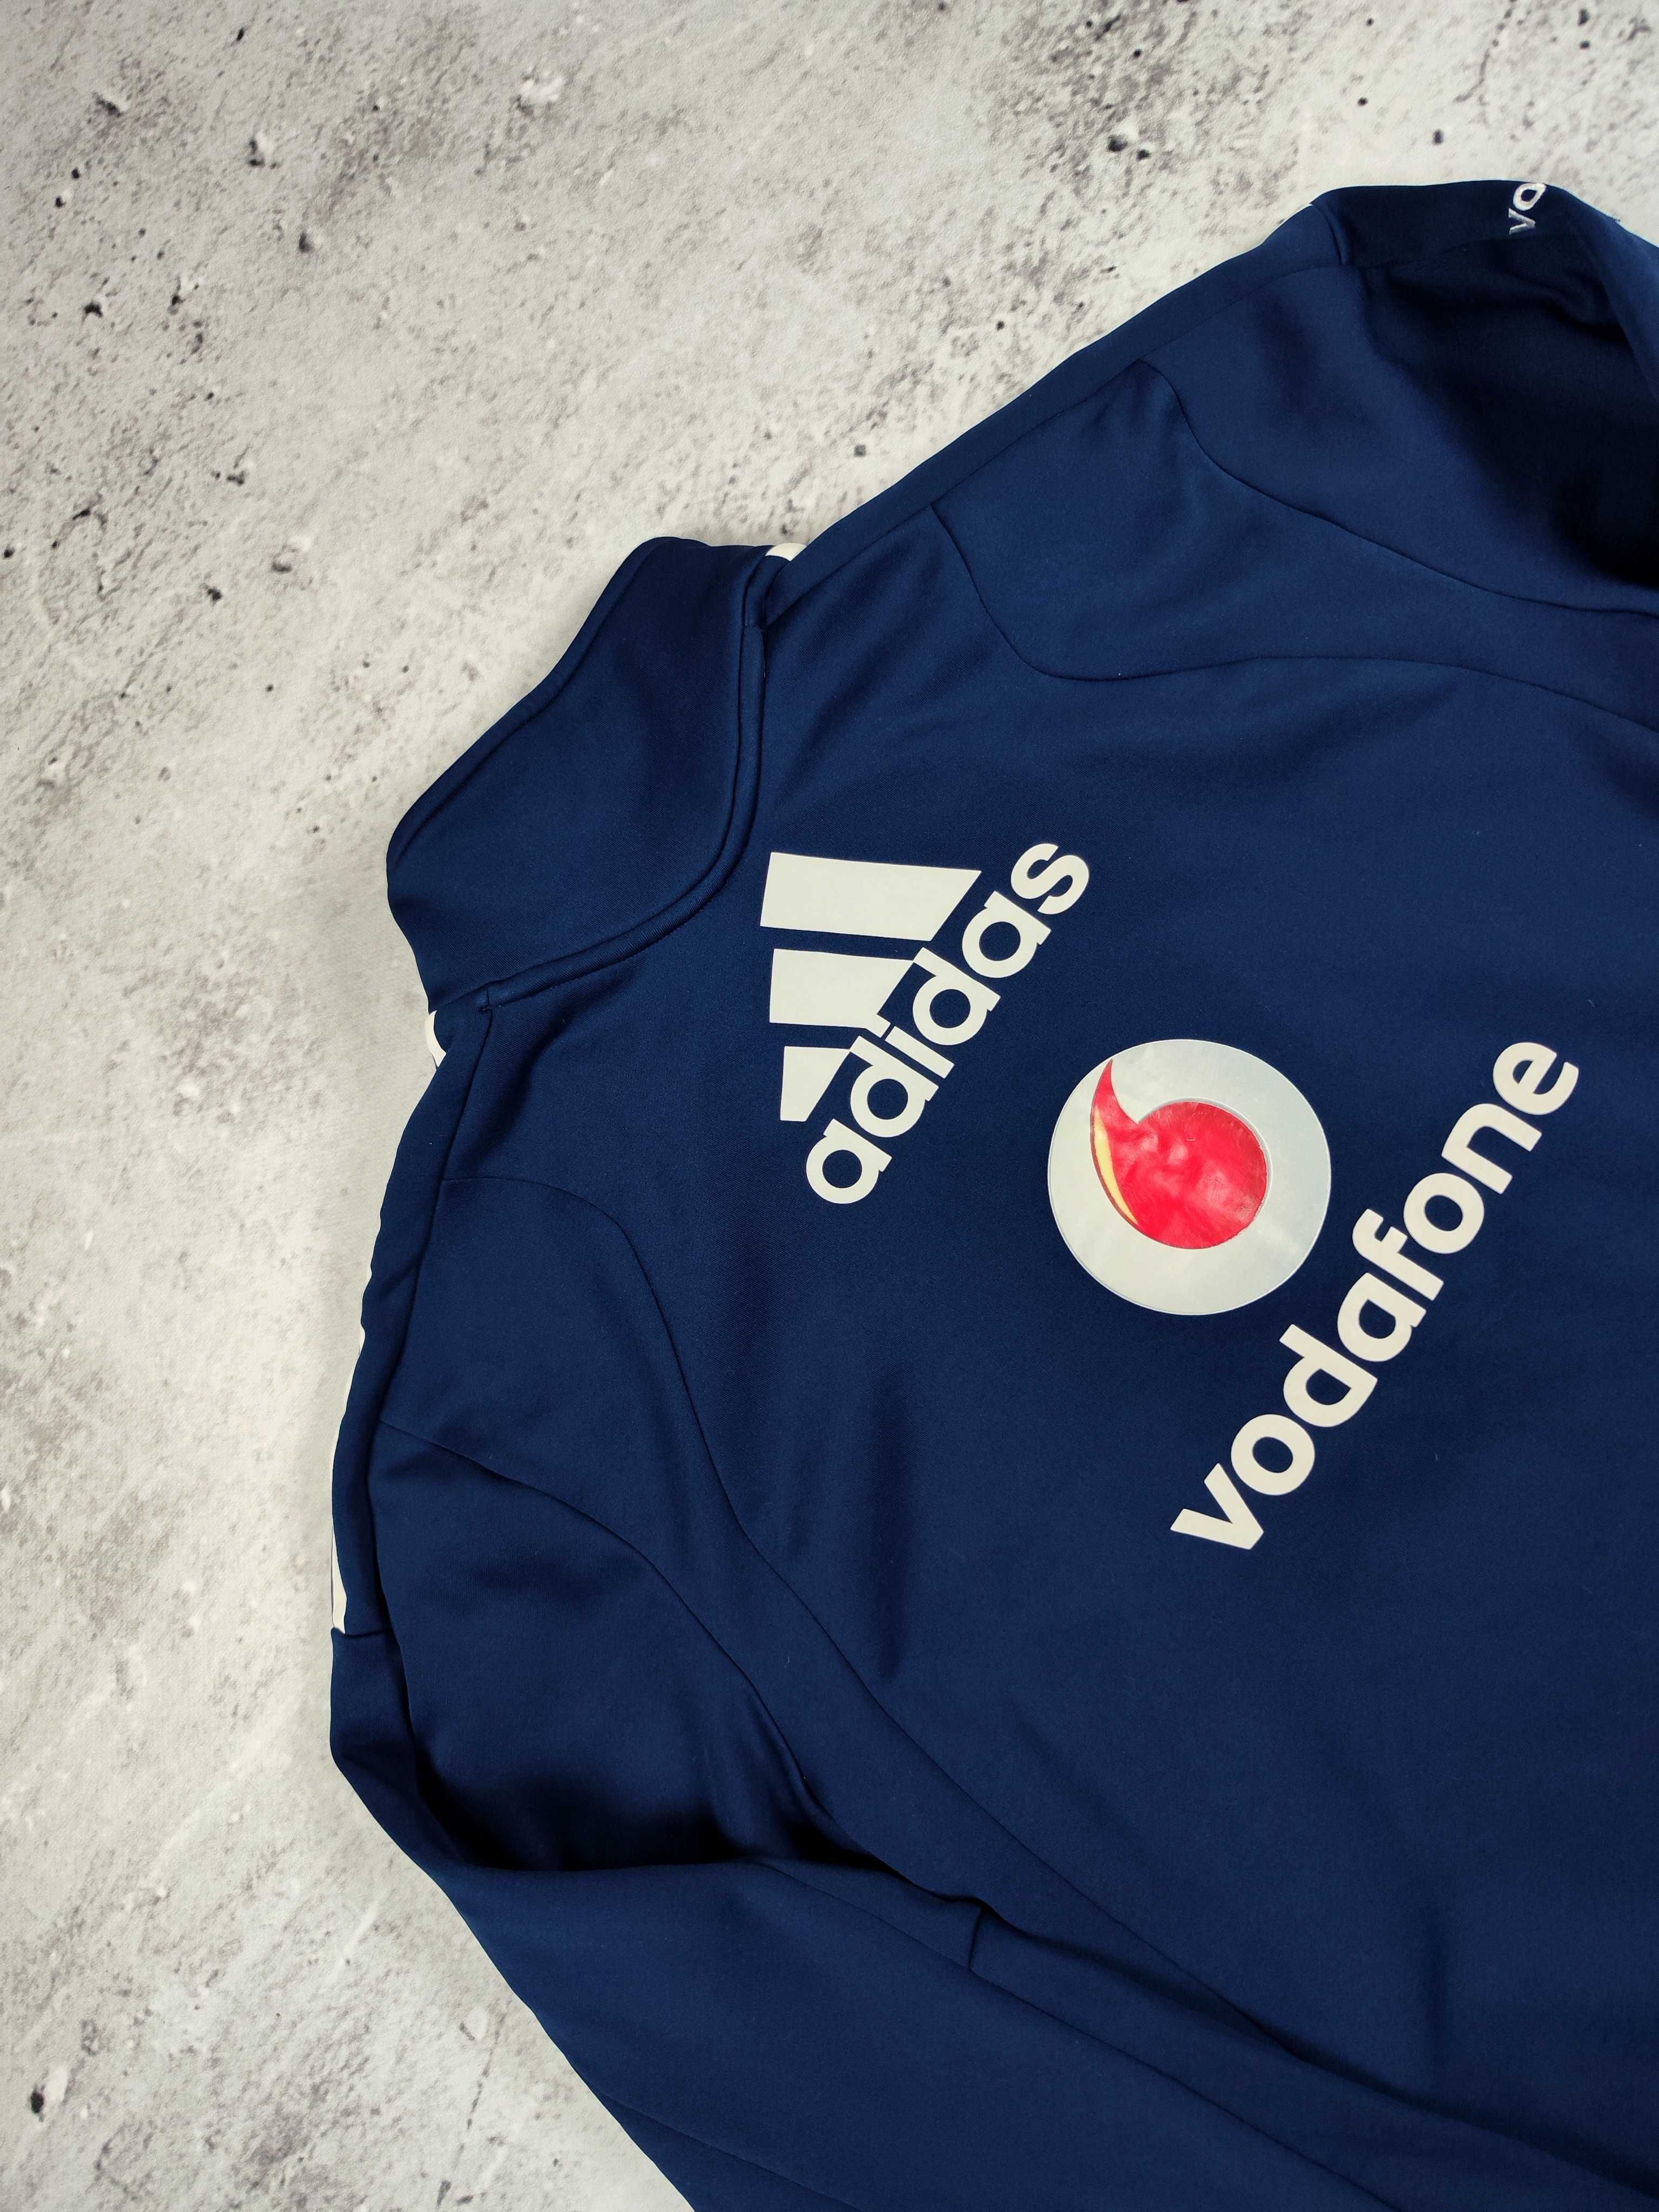 Bluza Adidas sportowa Vodafone piłkarska rozpinana 1/4 r. L